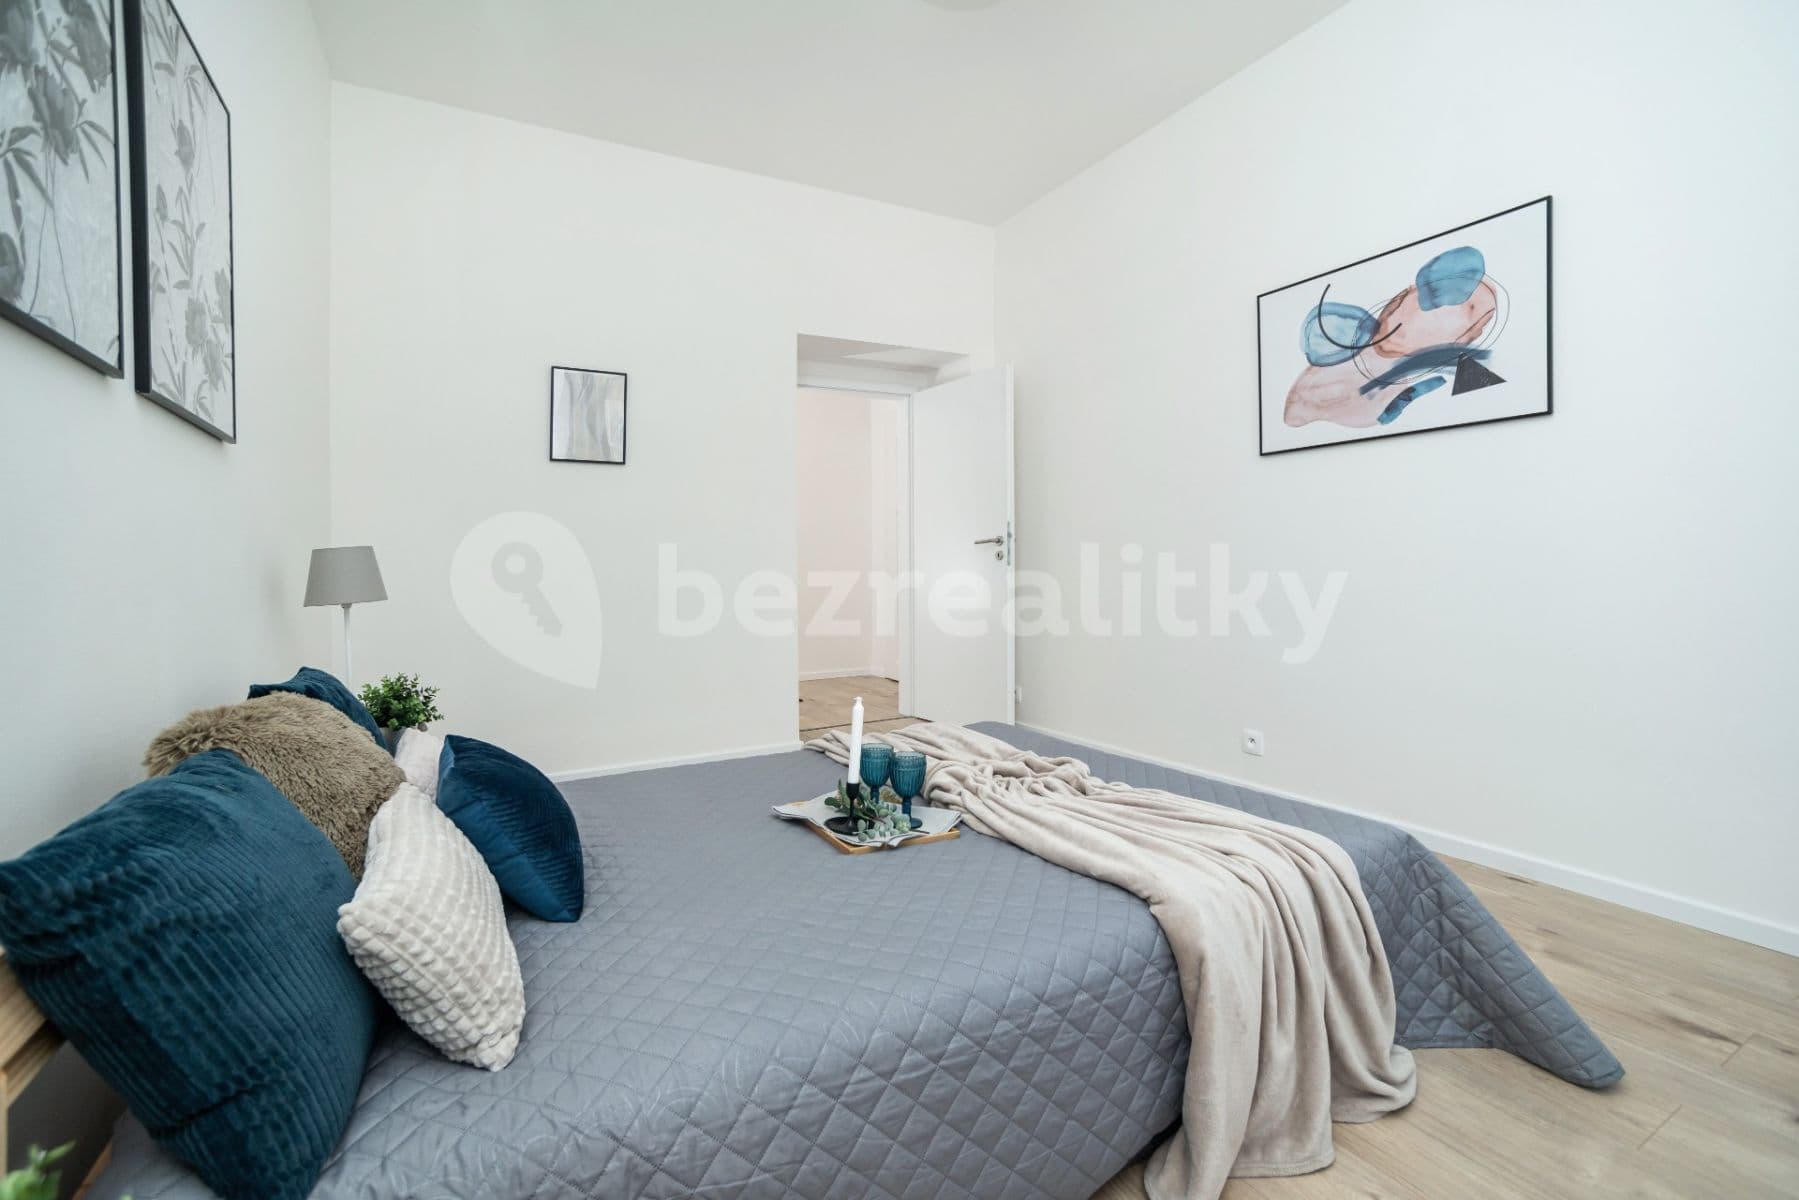 1 bedroom with open-plan kitchen flat for sale, 52 m², K Vodojemu, Prague, Prague